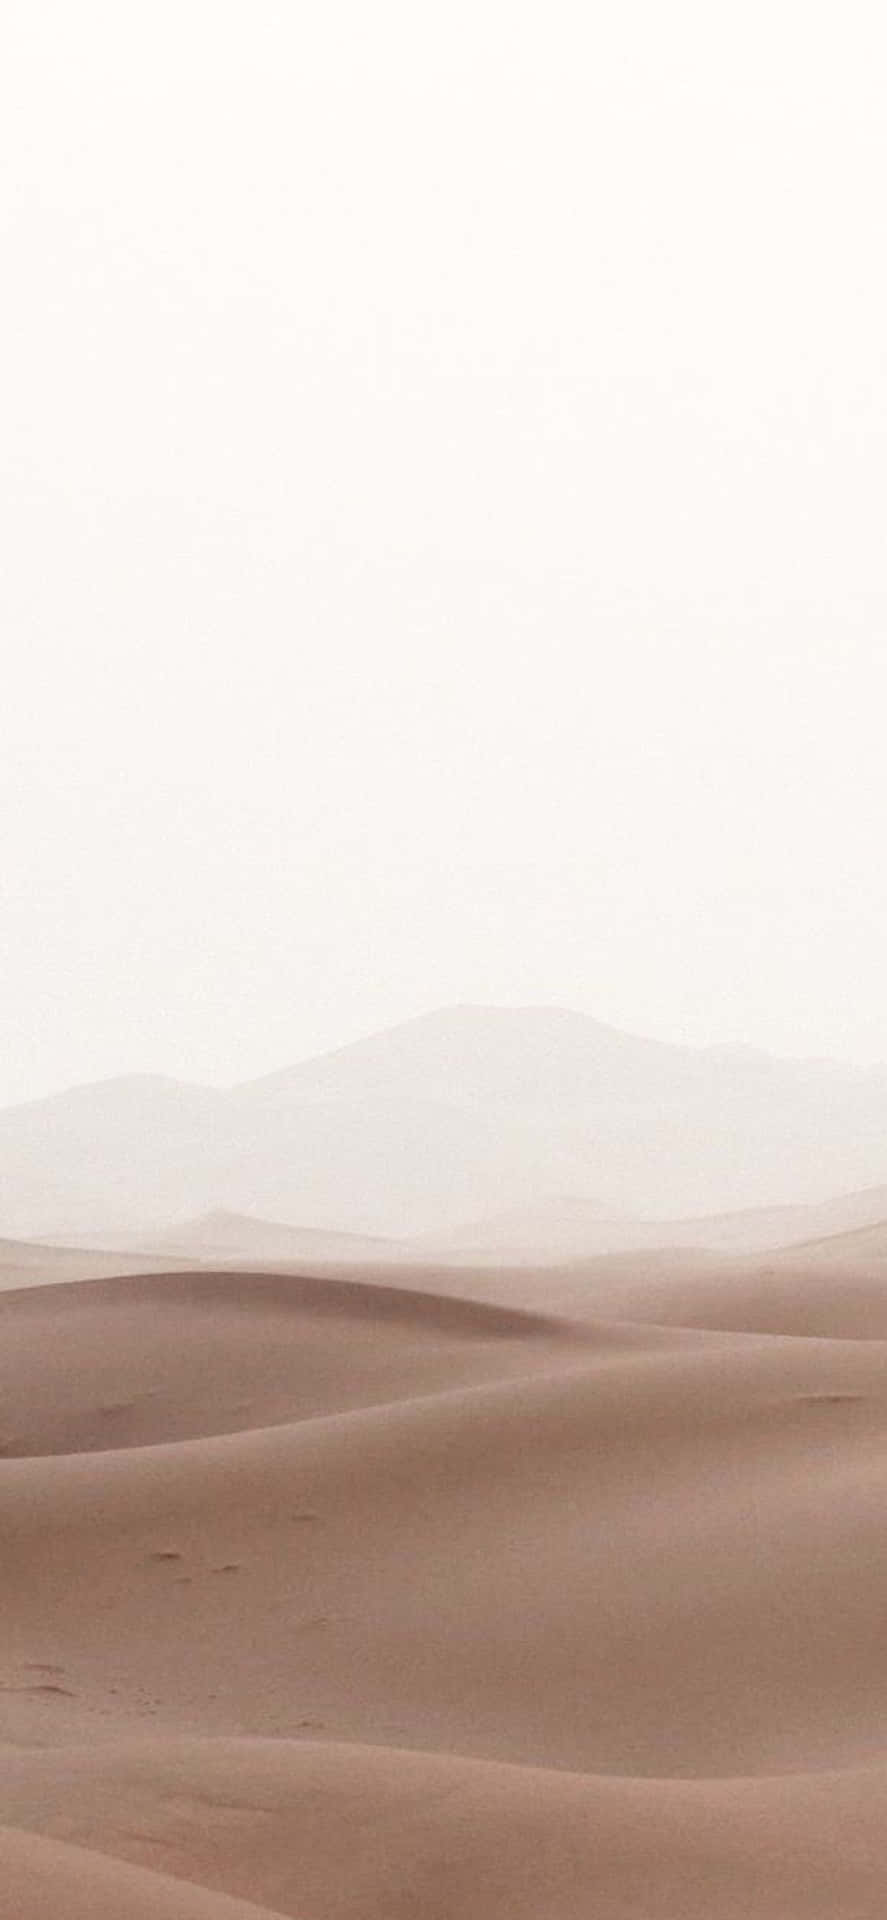 Minimalist shot of a dune against sky in desert stock photo